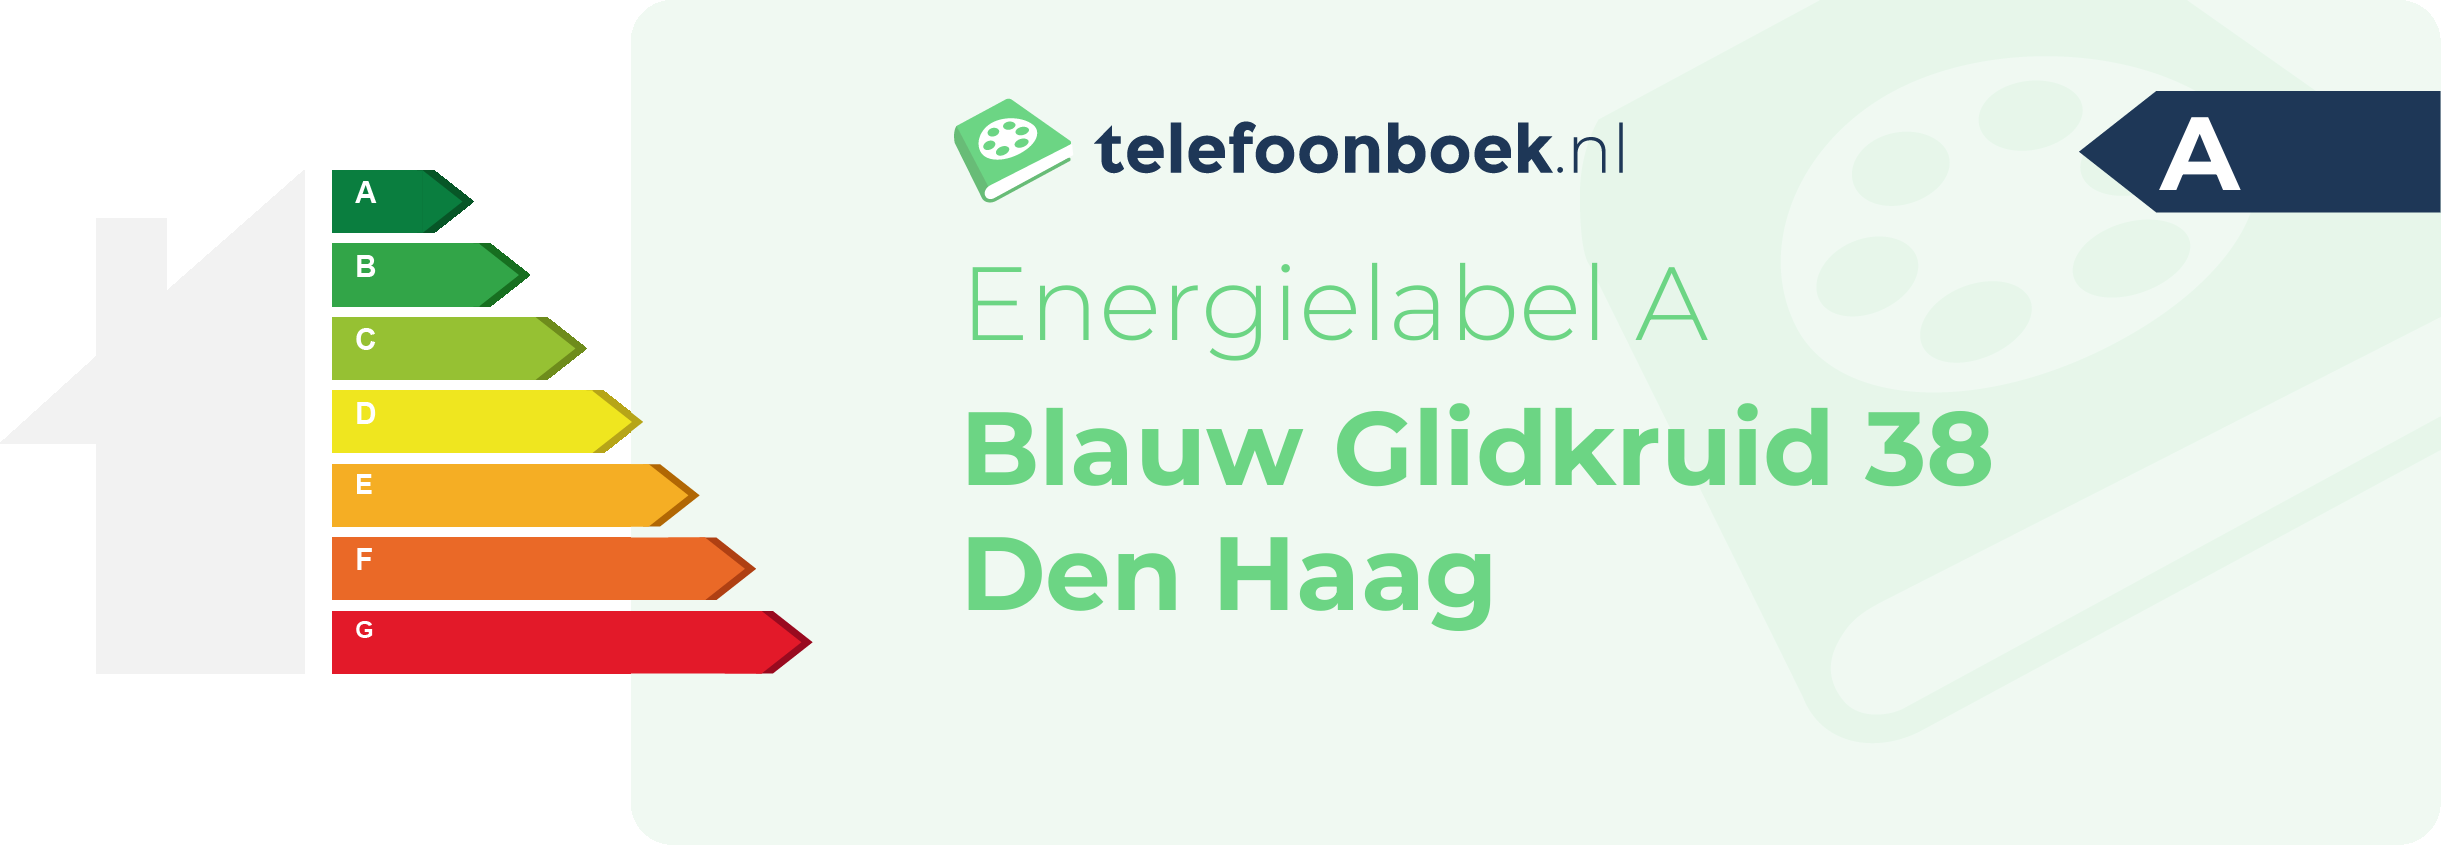 Energielabel Blauw Glidkruid 38 Den Haag